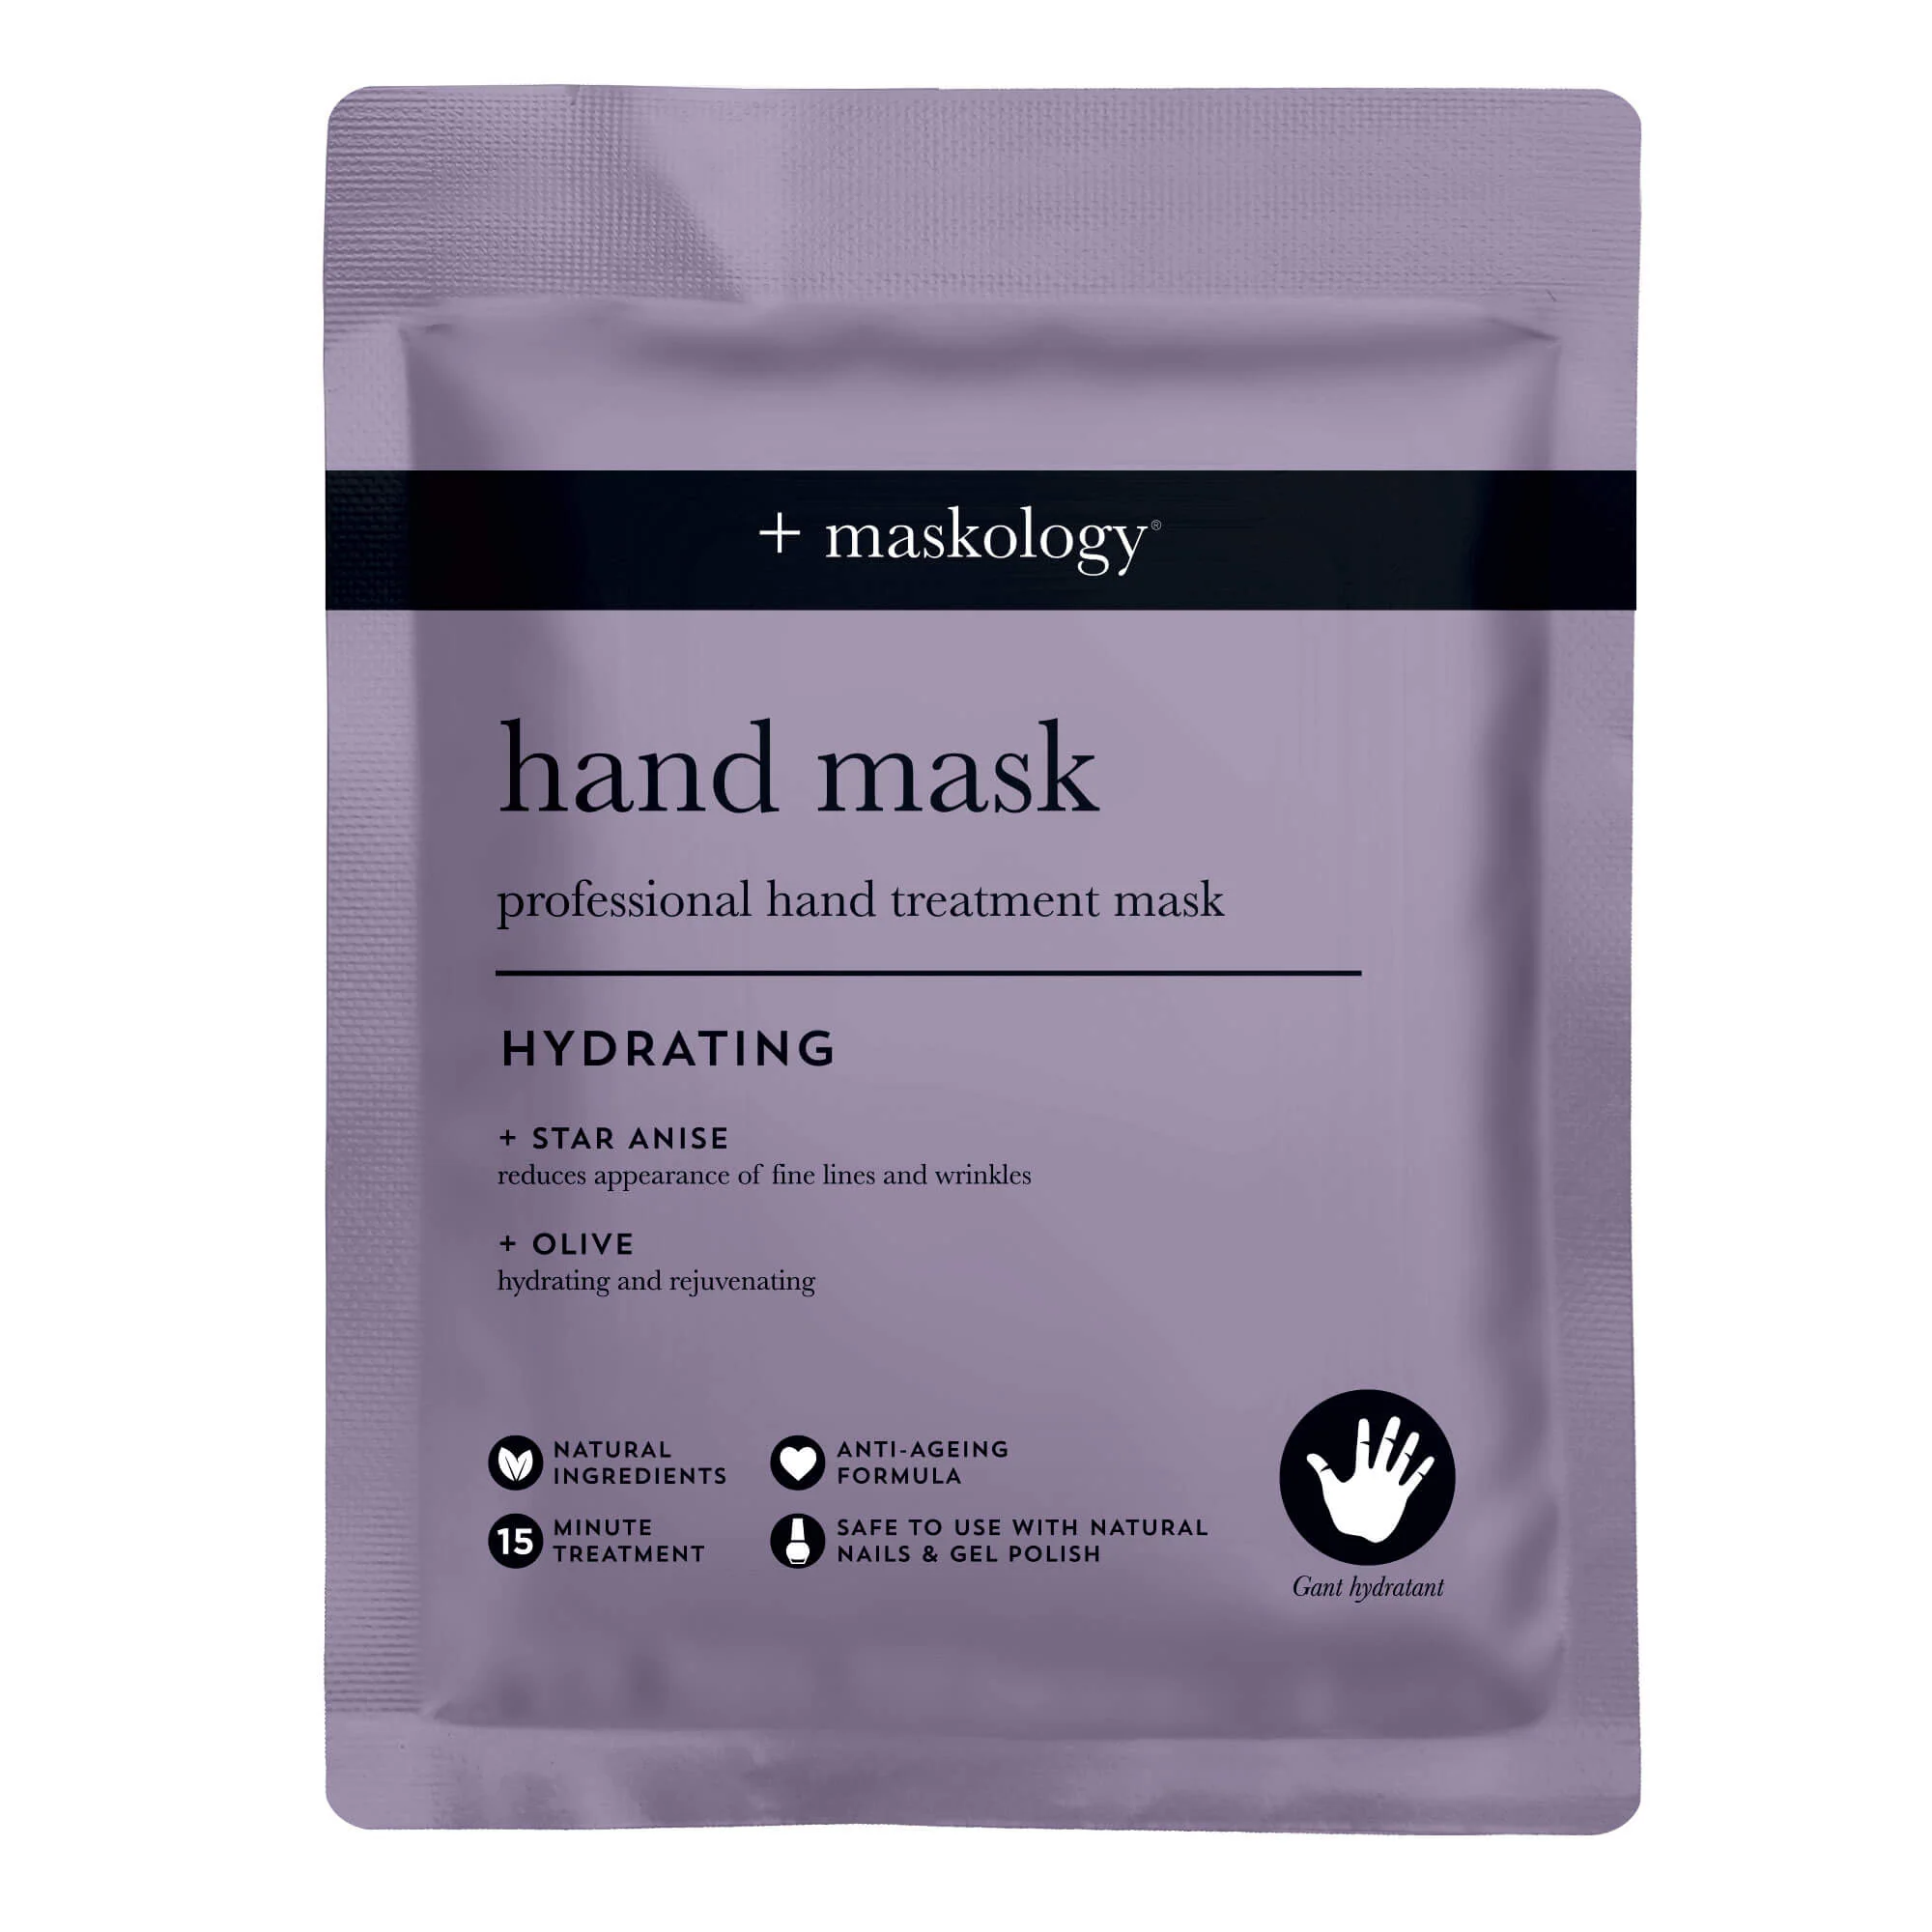 Maskology Hand Mask Professional Hand Treatment Mask